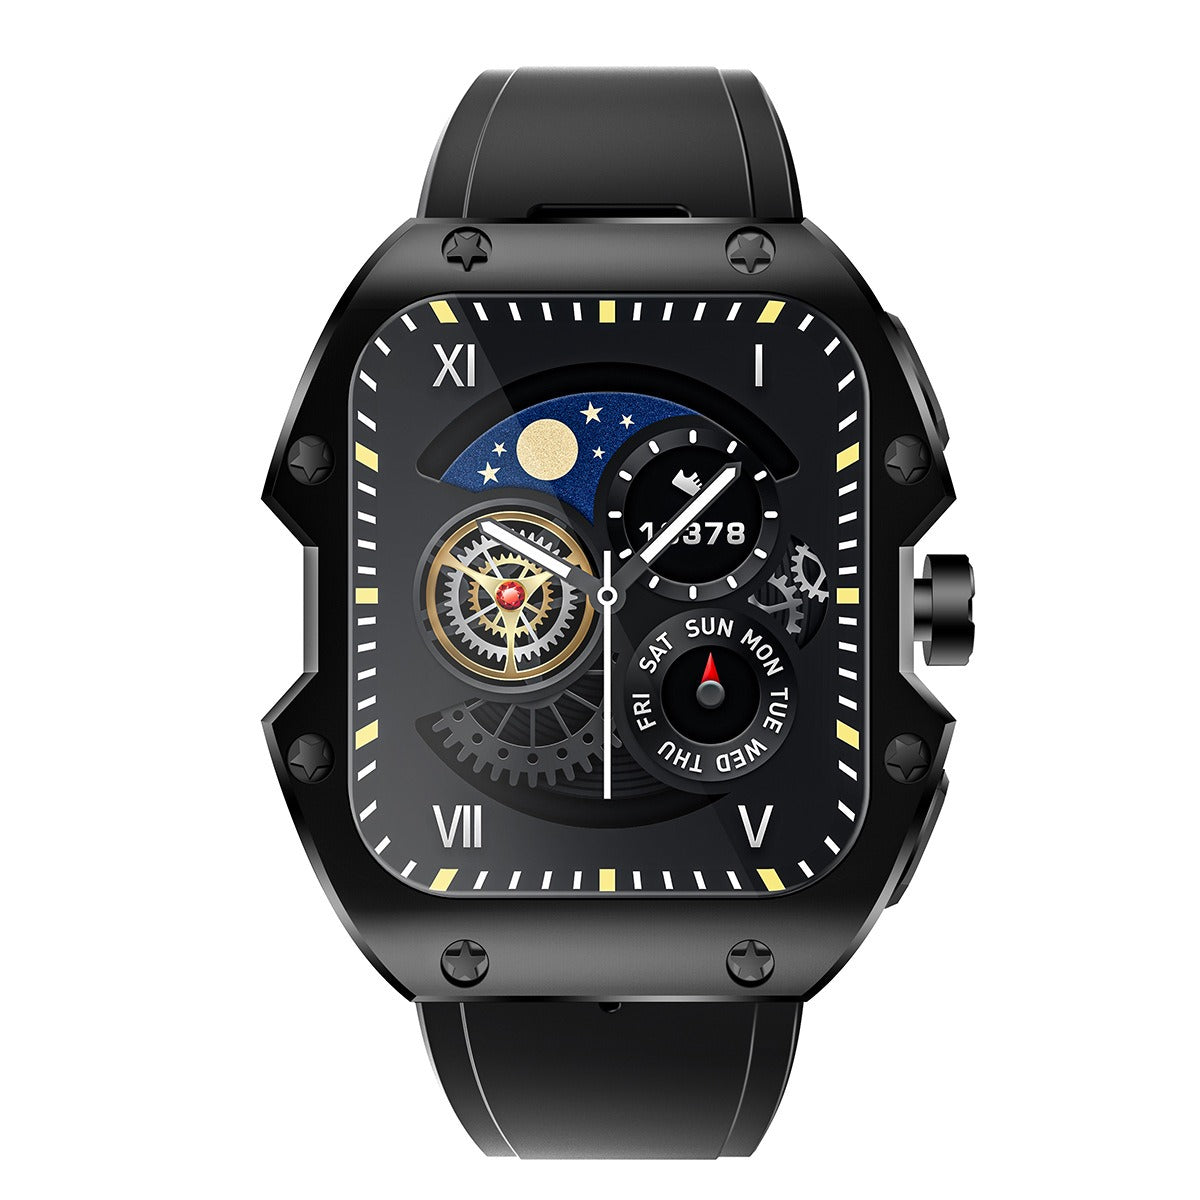 Rugged sports smart watch 1.91 inch 520mAH multi-scene sports mode 5ATM